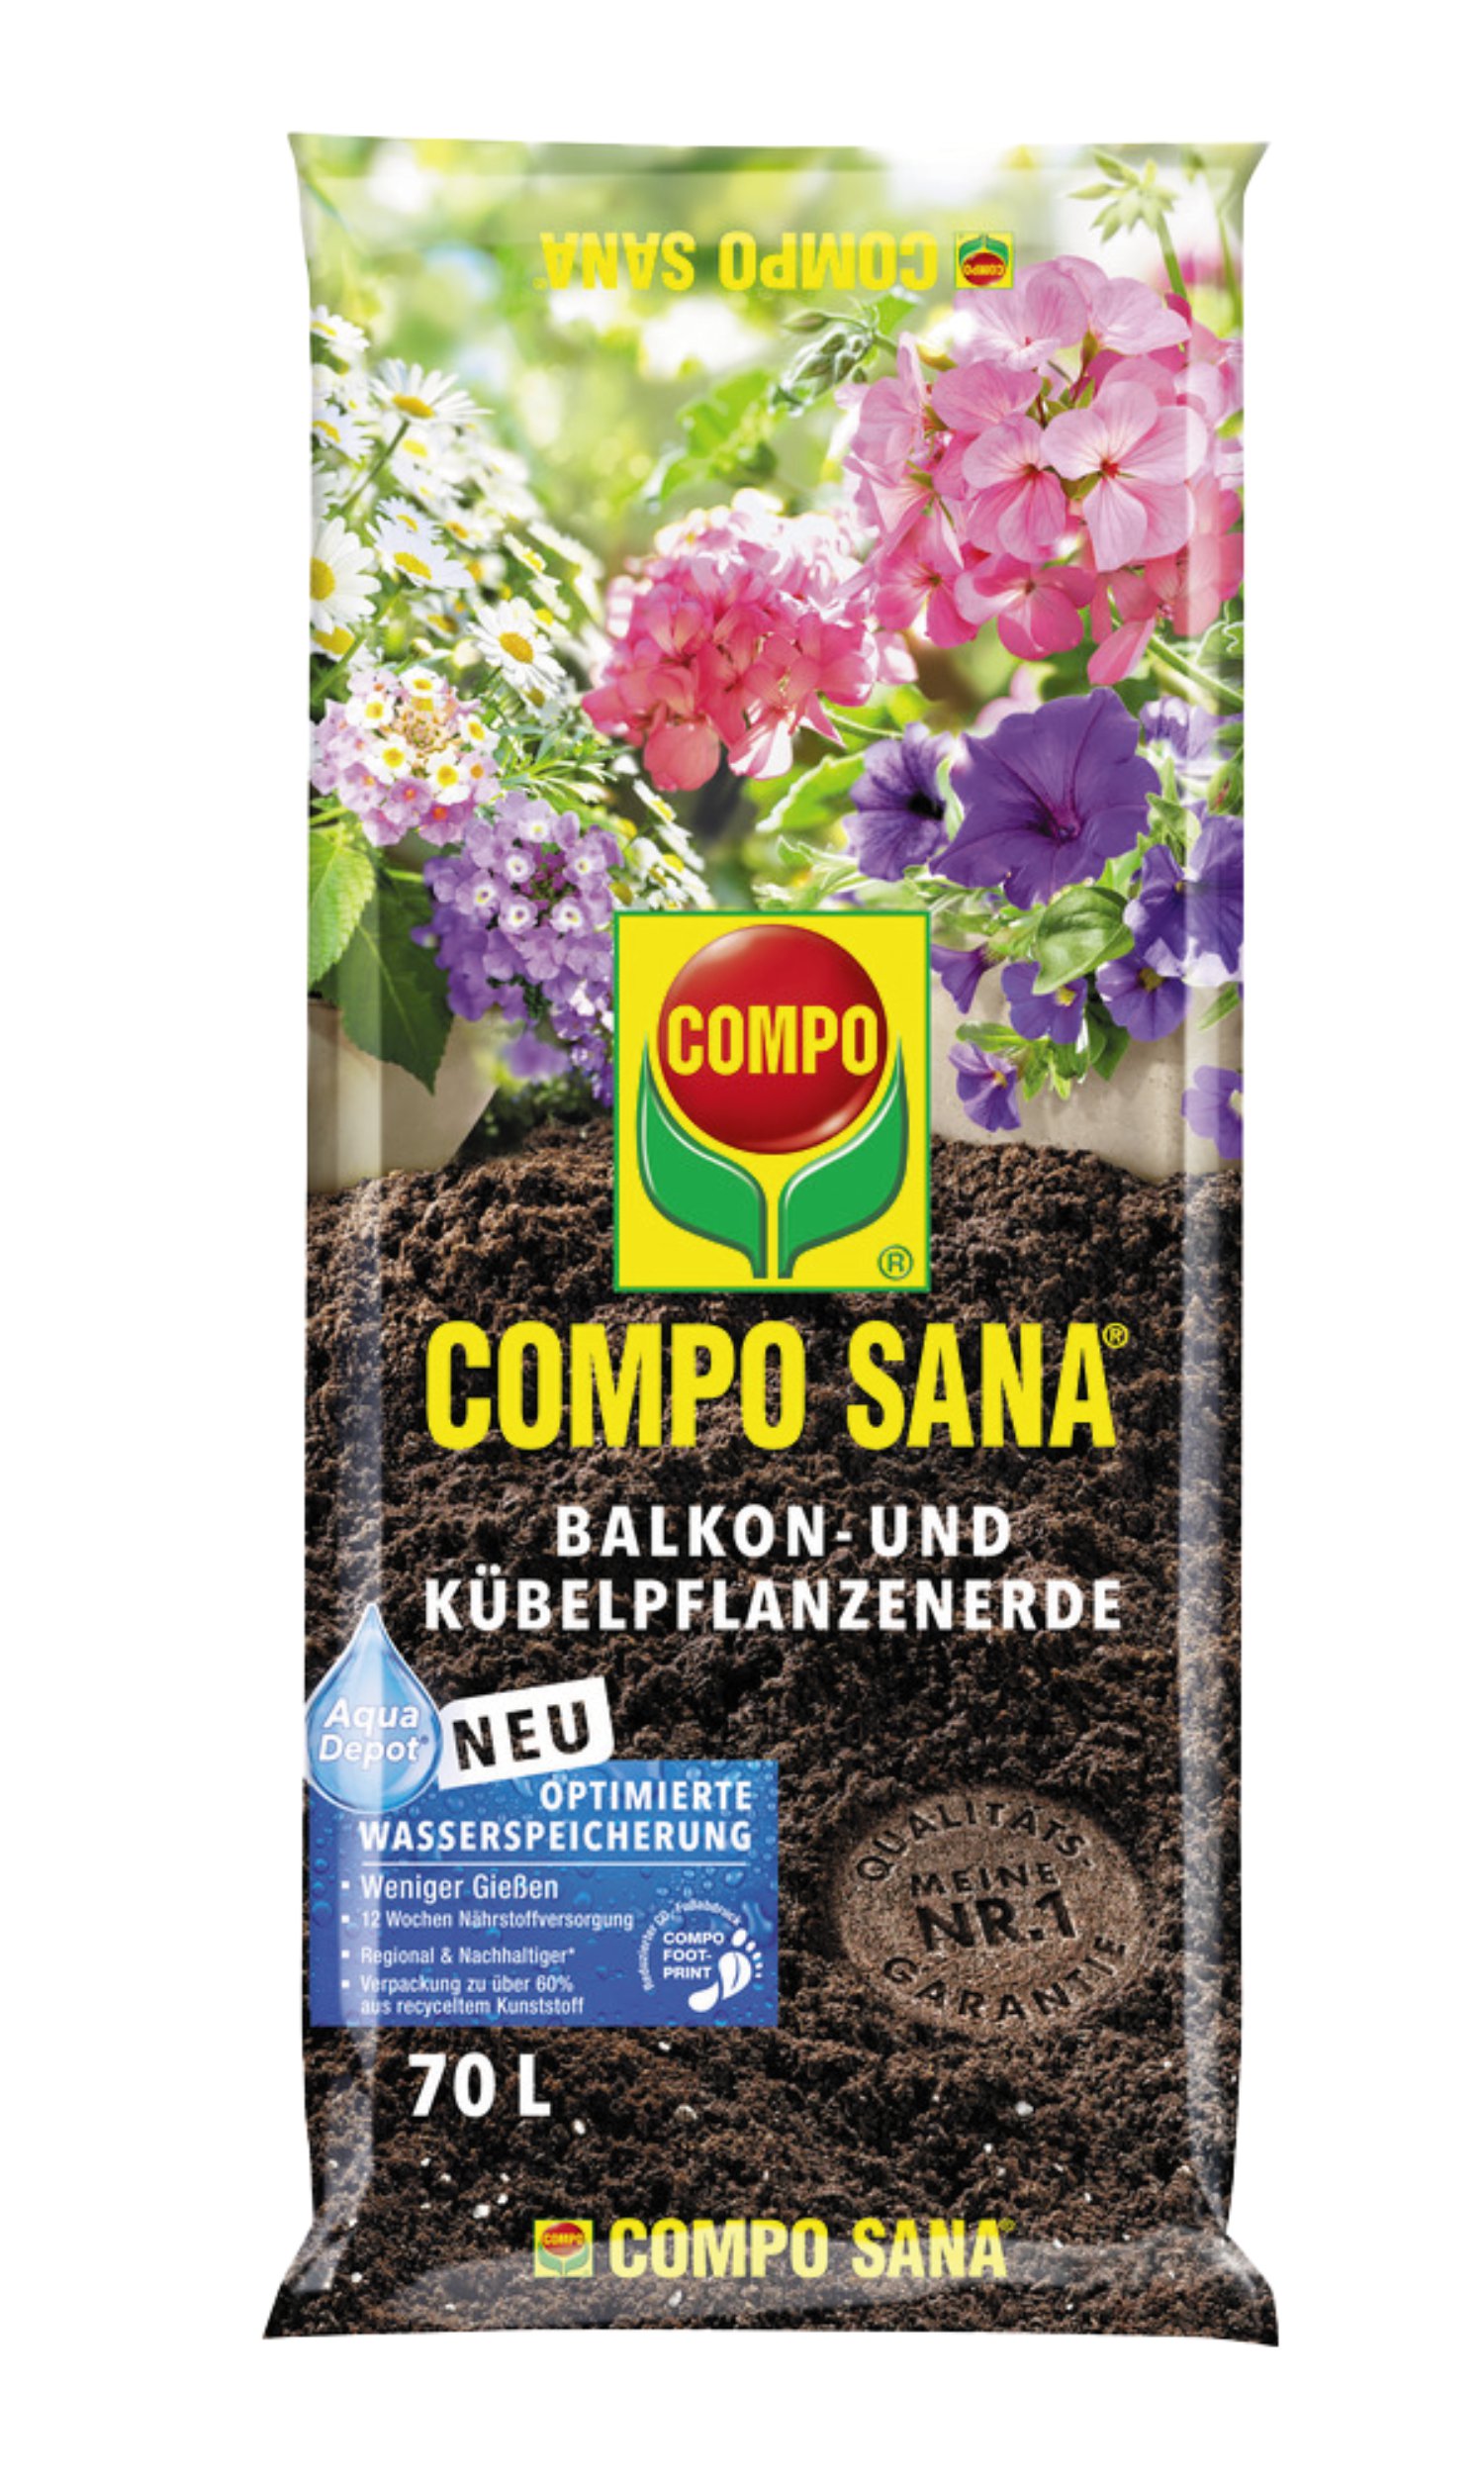 COMPO SANA® Balkon- und Kübelpflanzenerde 70 l